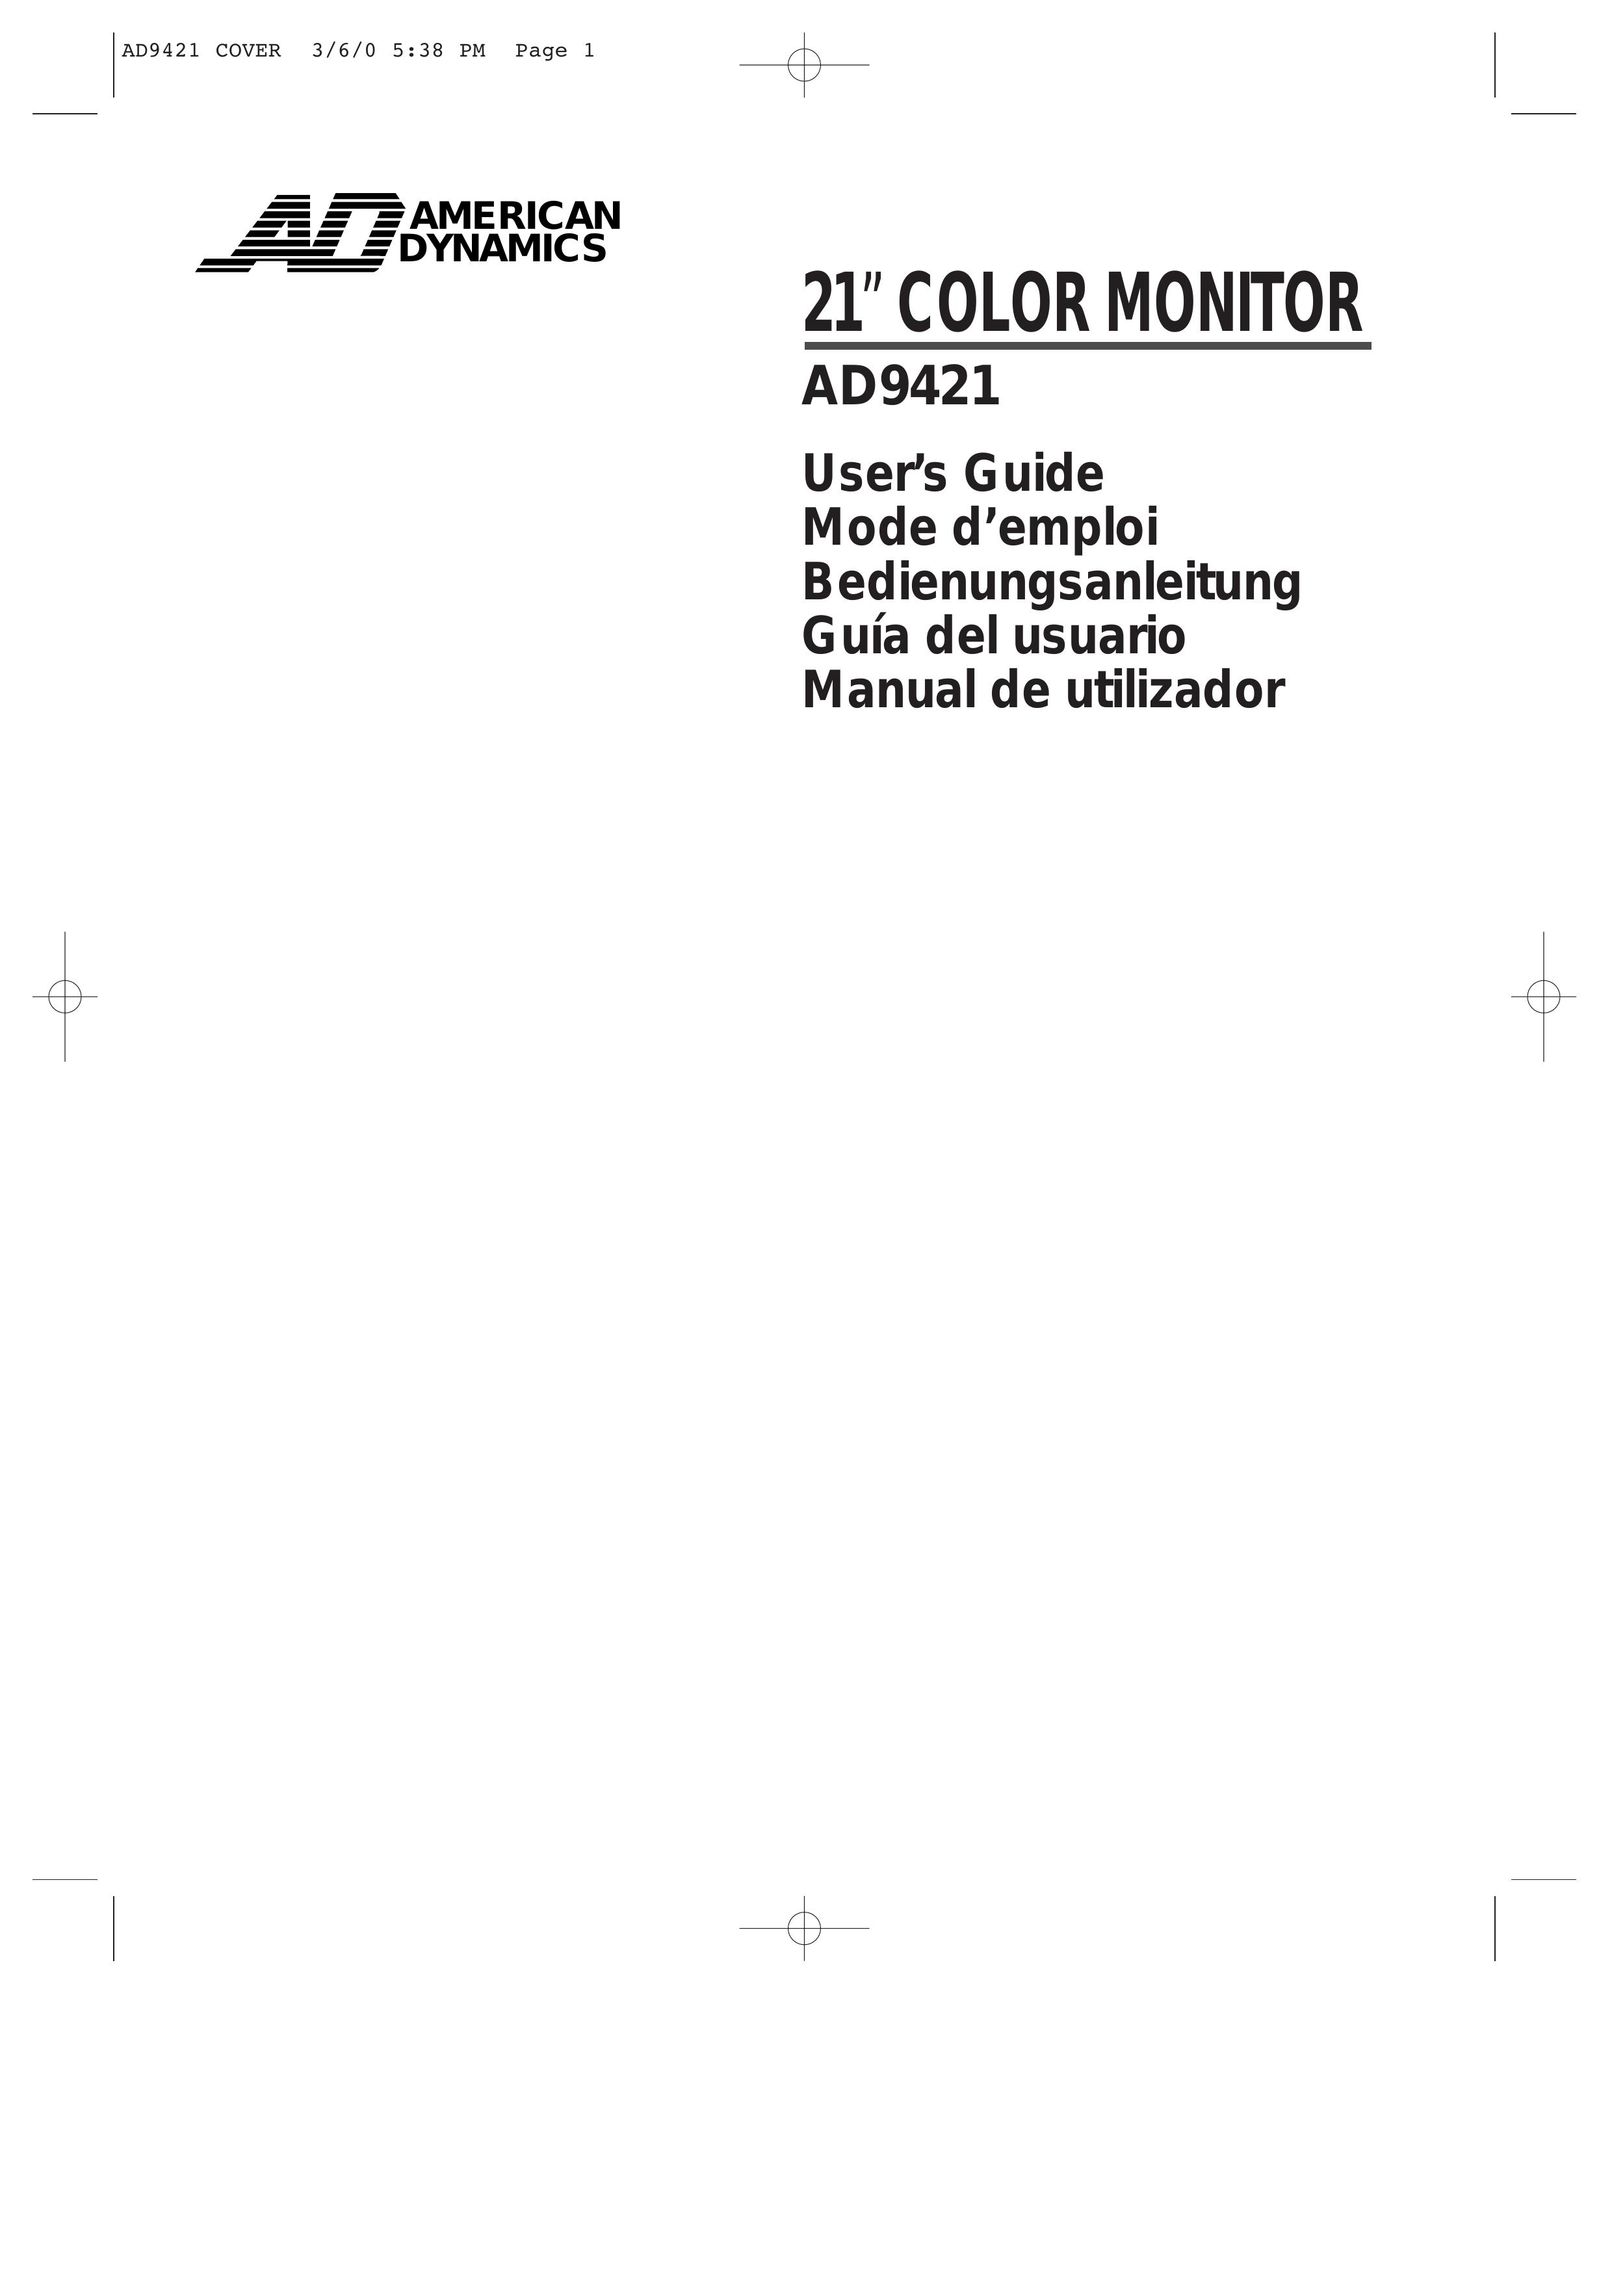 American Dynamics AD9421 Computer Monitor User Manual